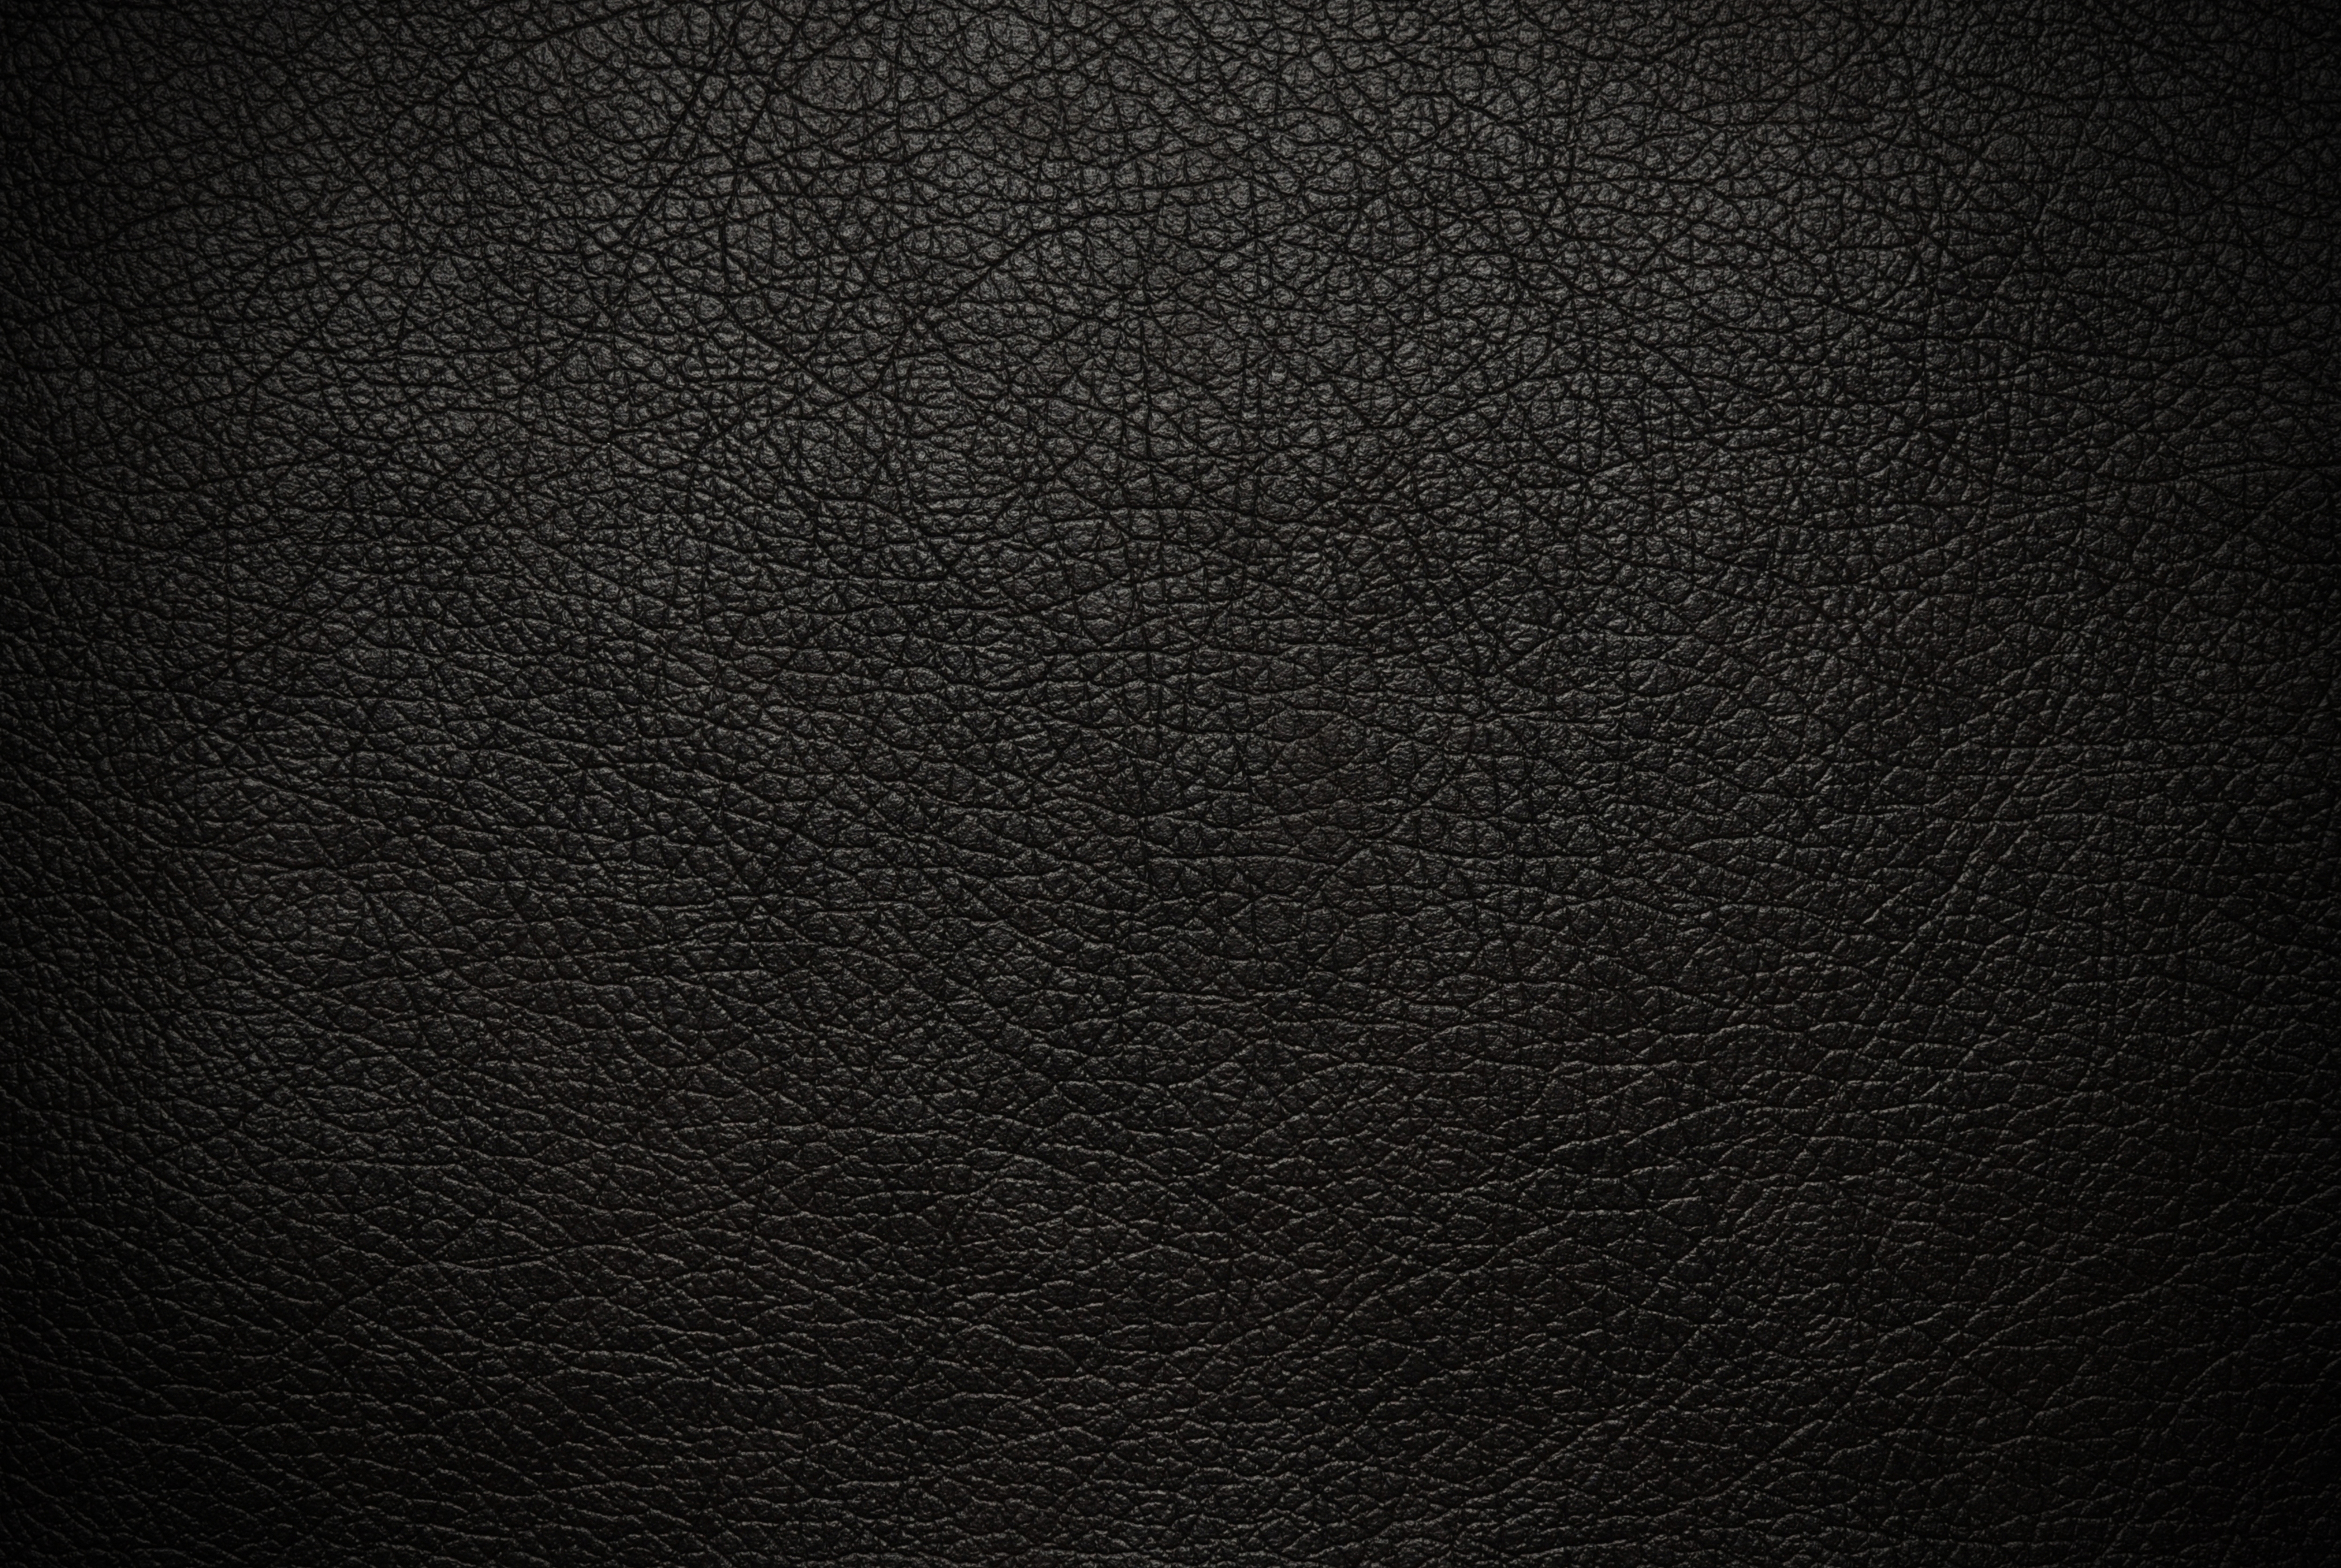 Black Cracked Background Texture Wallpaper